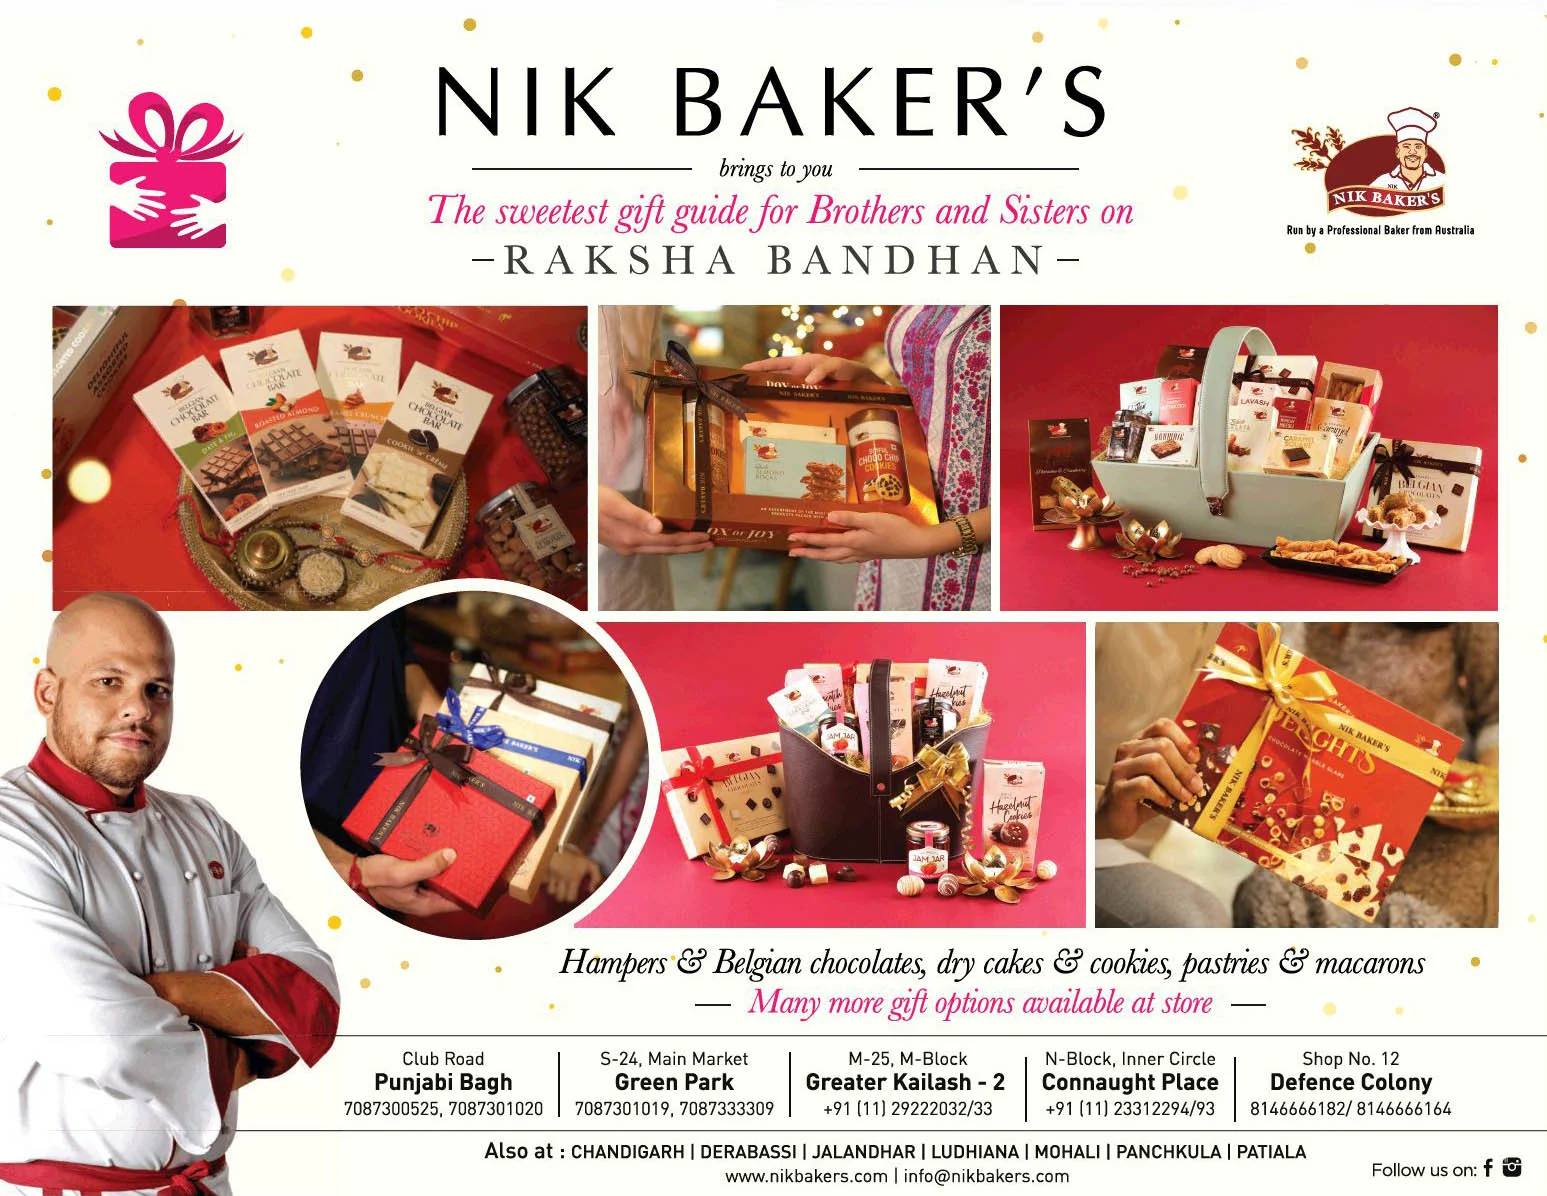 3 NIK Bakers bring to you Raksha Bandhan